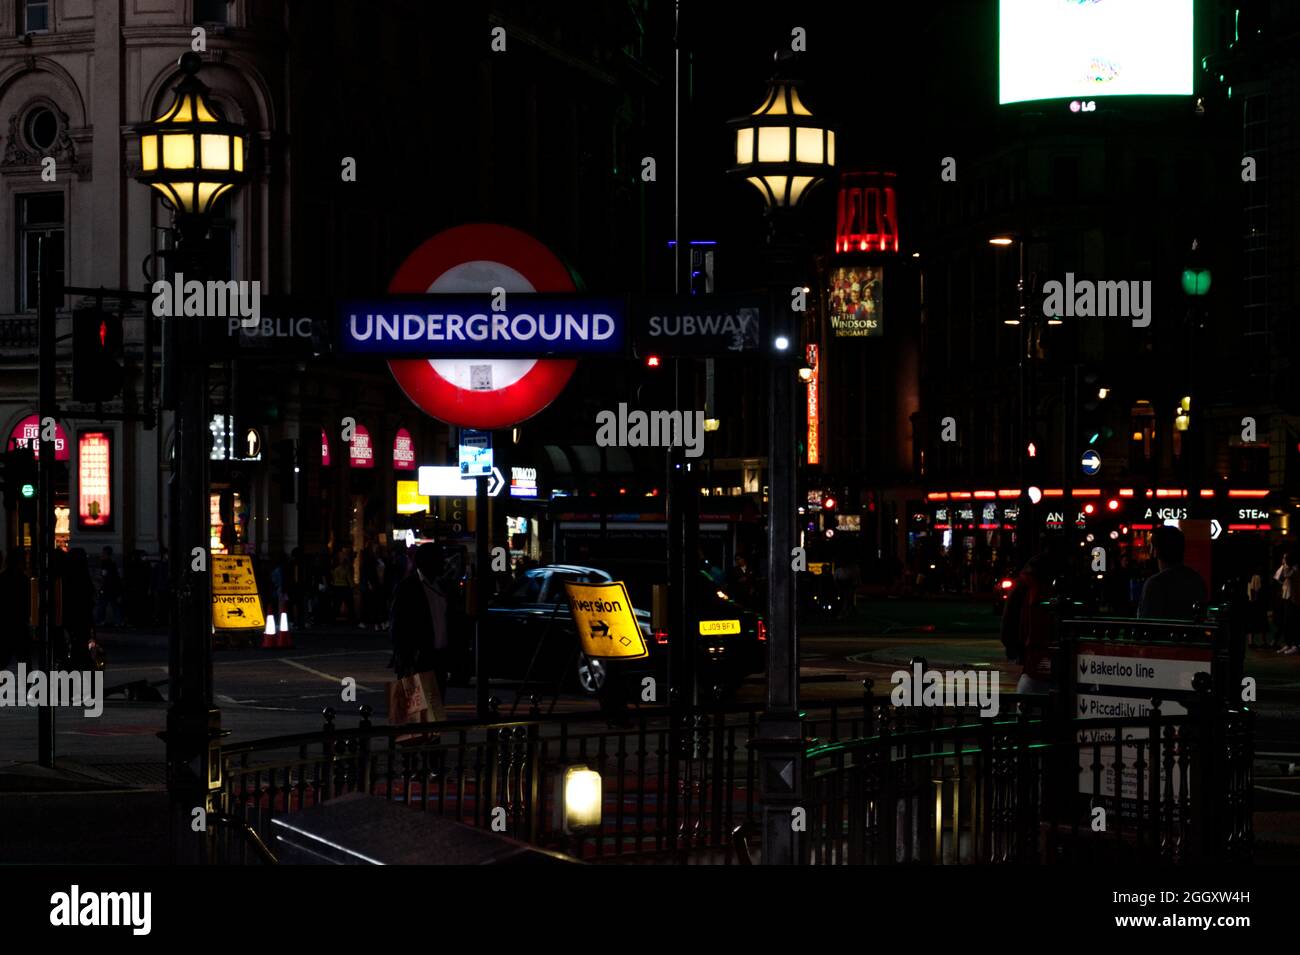 London Underground sign at night Stock Photo